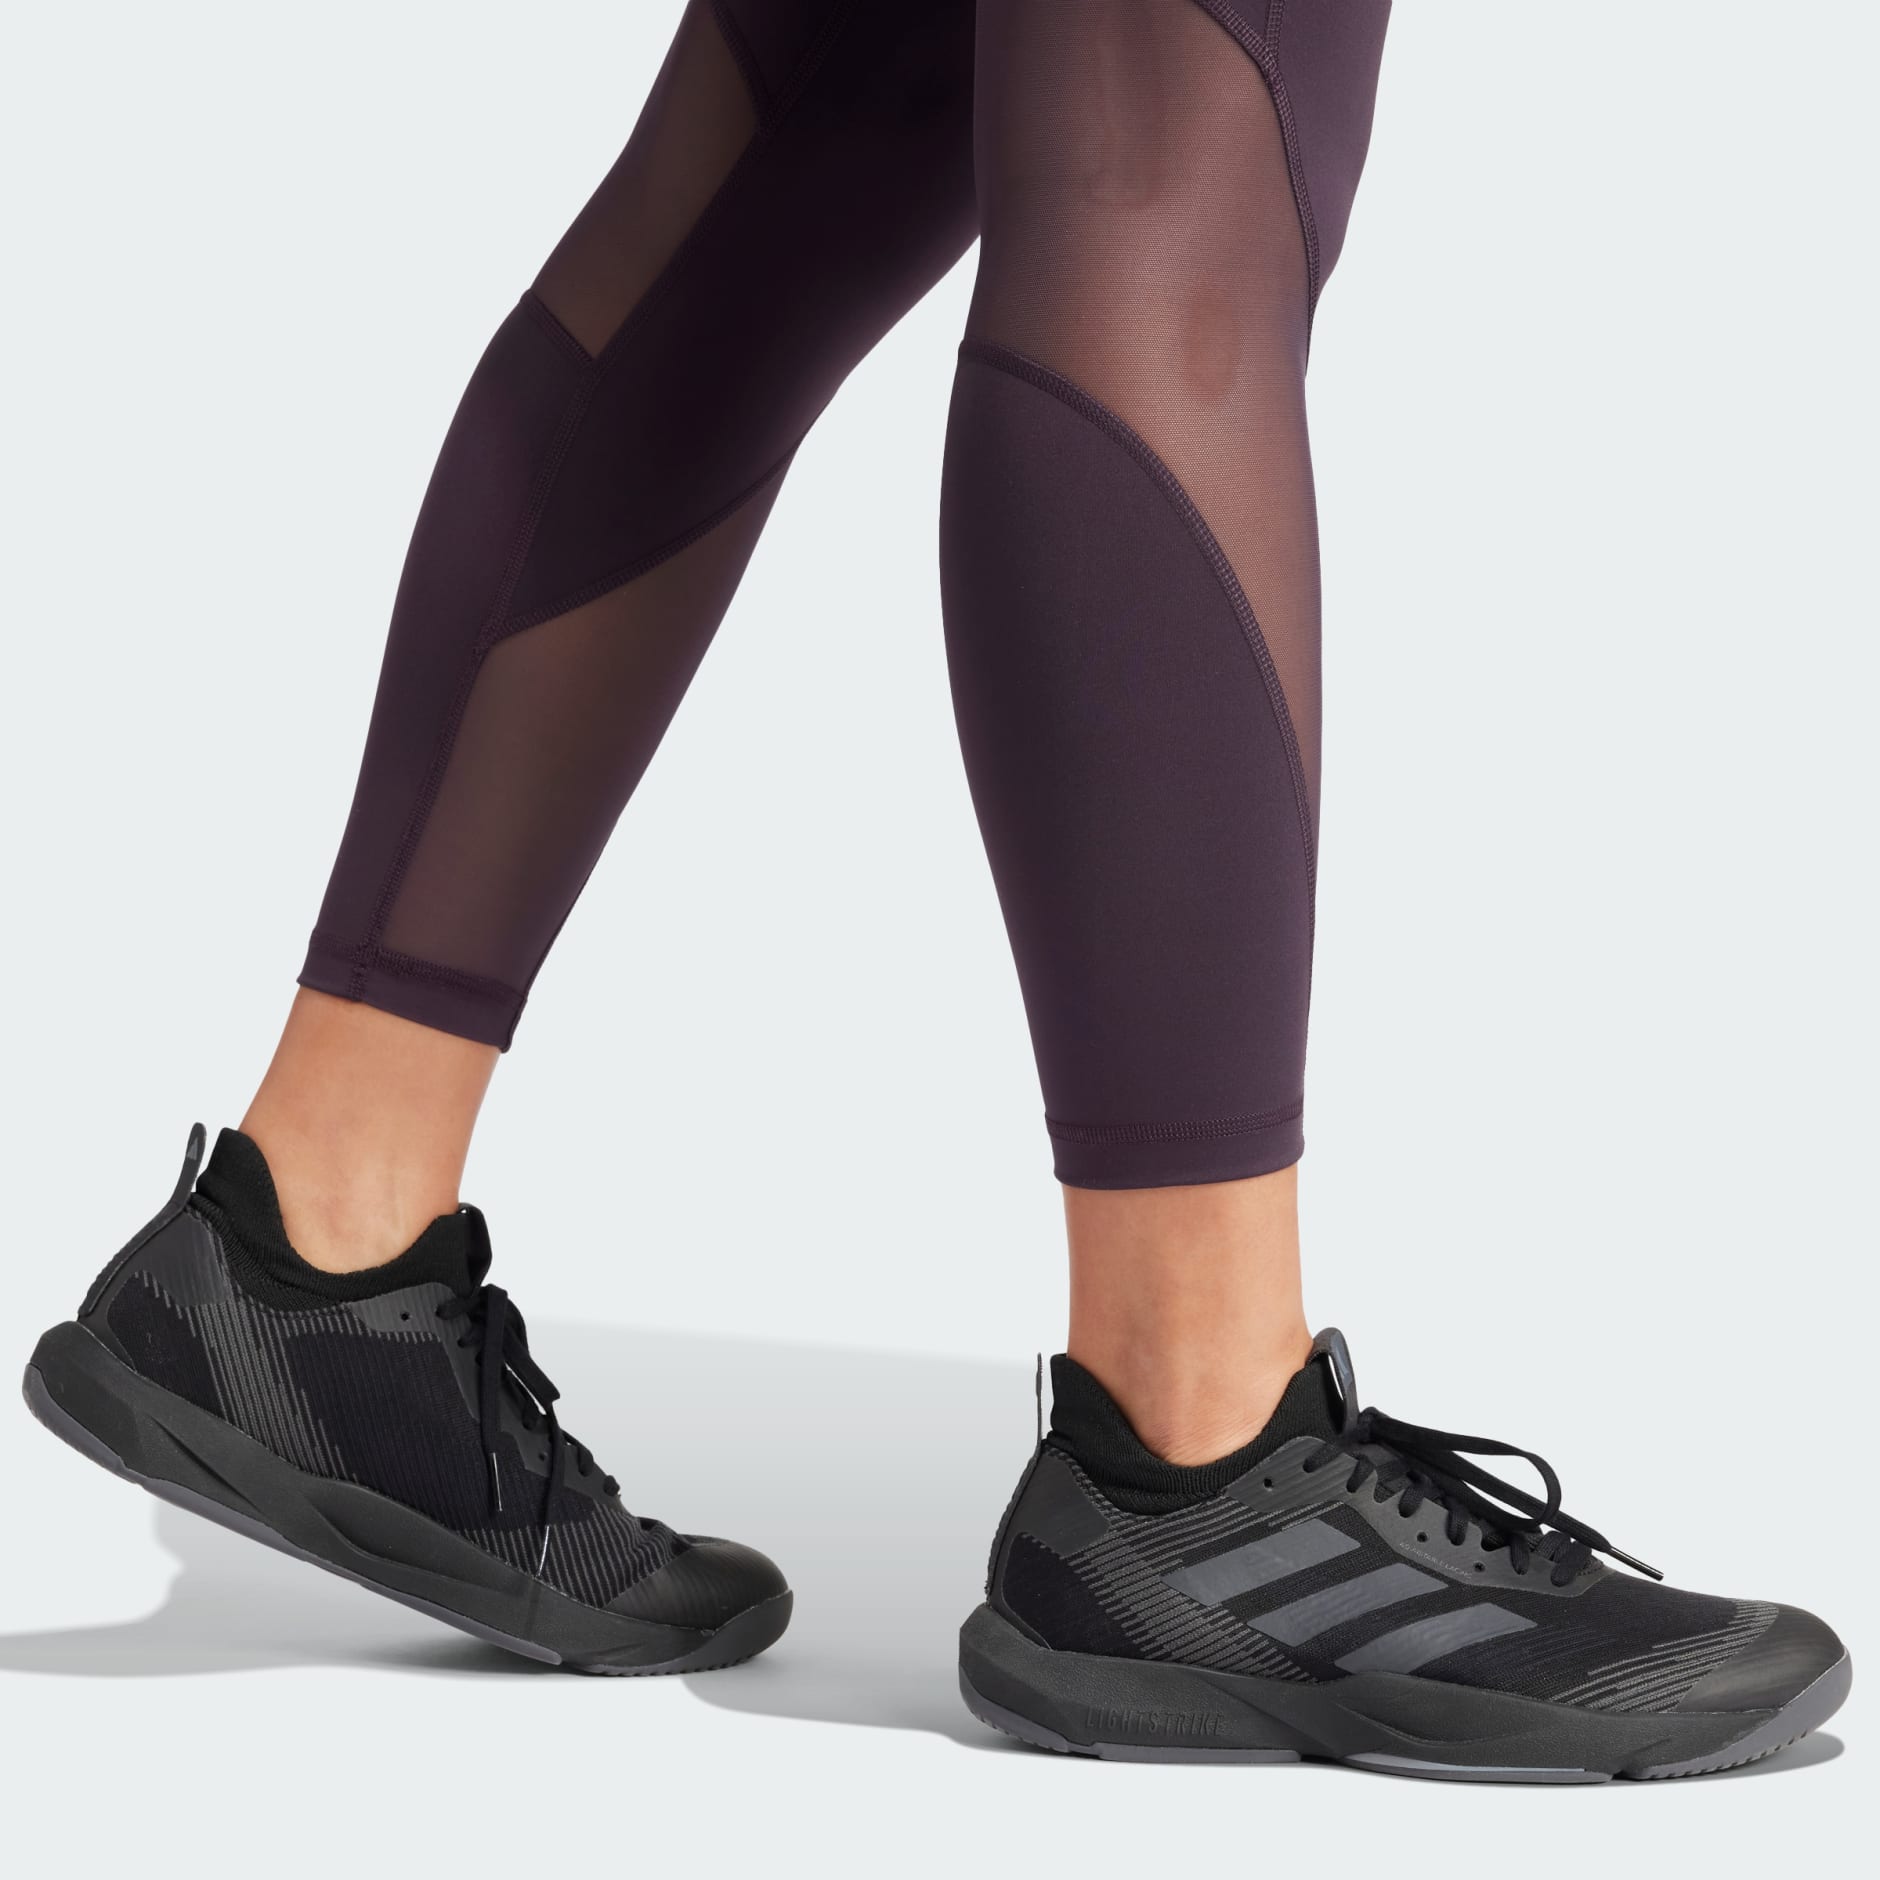 Nike + Power Mesh Training Leggings